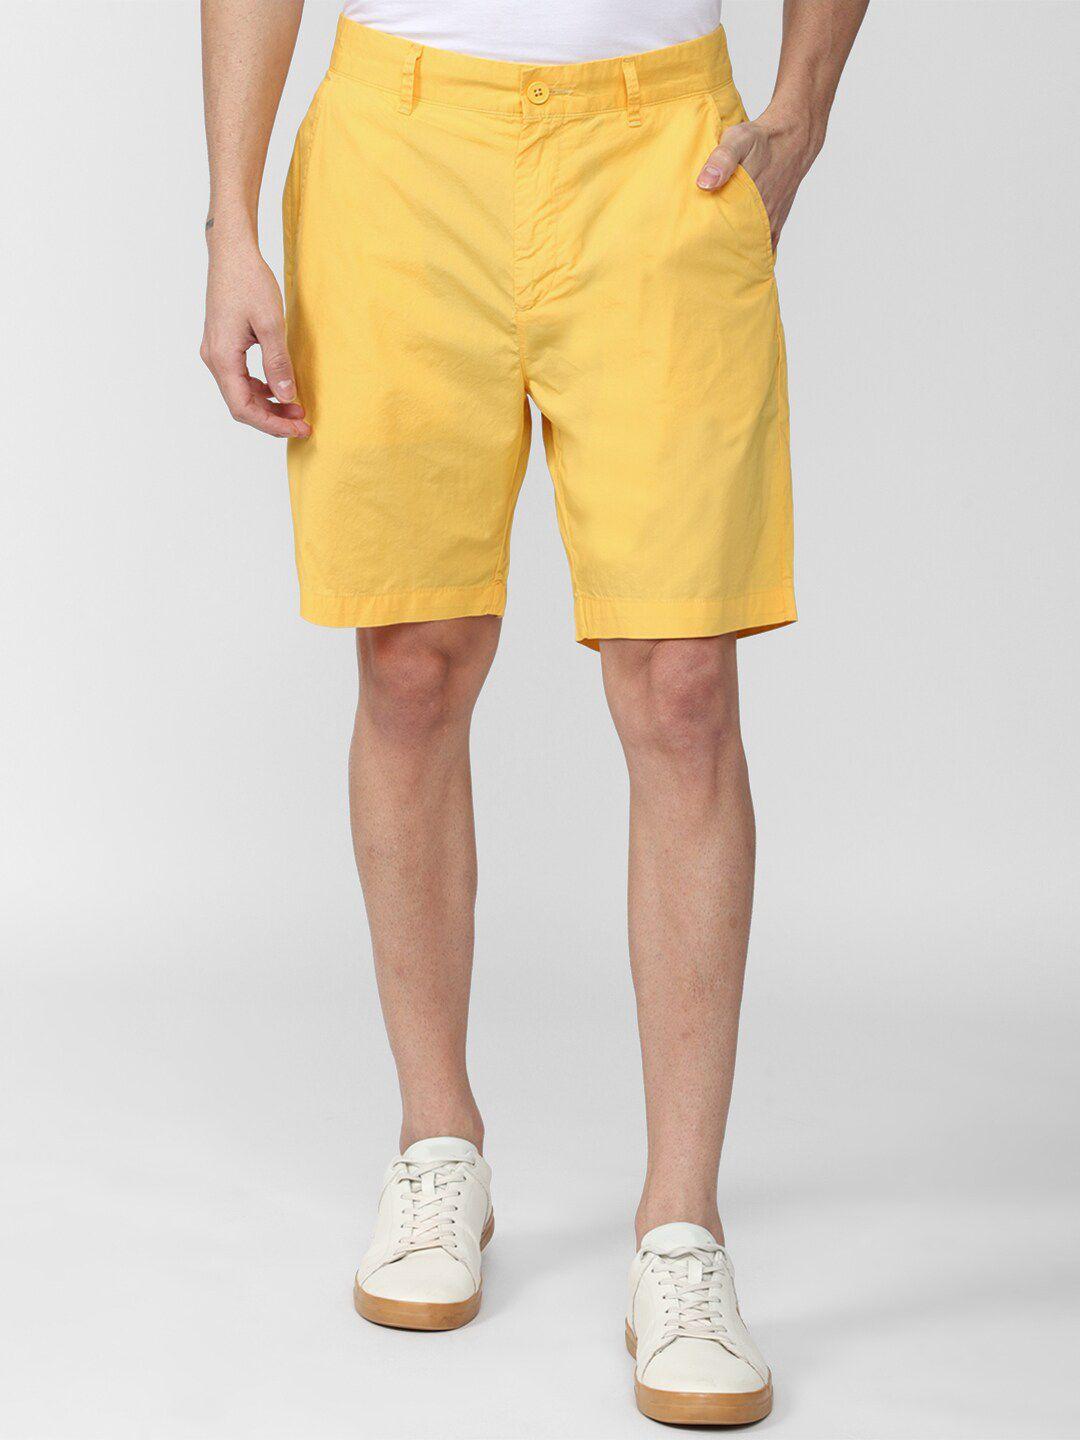 forever-21-men-yellow-shorts